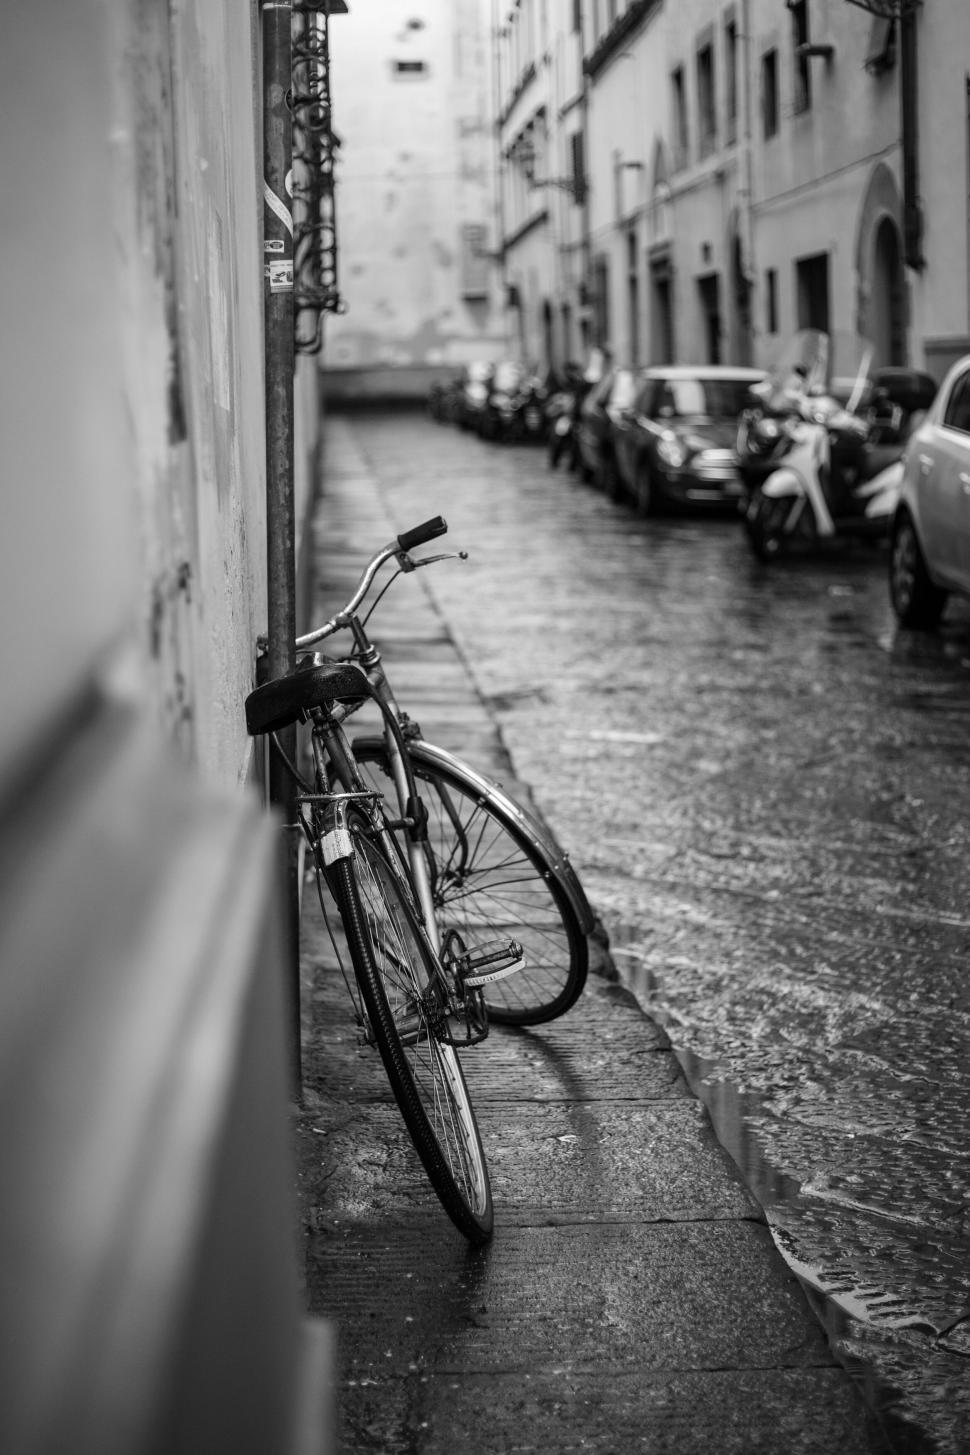 Free Image of Vintage bicycle on wet cobblestone street 